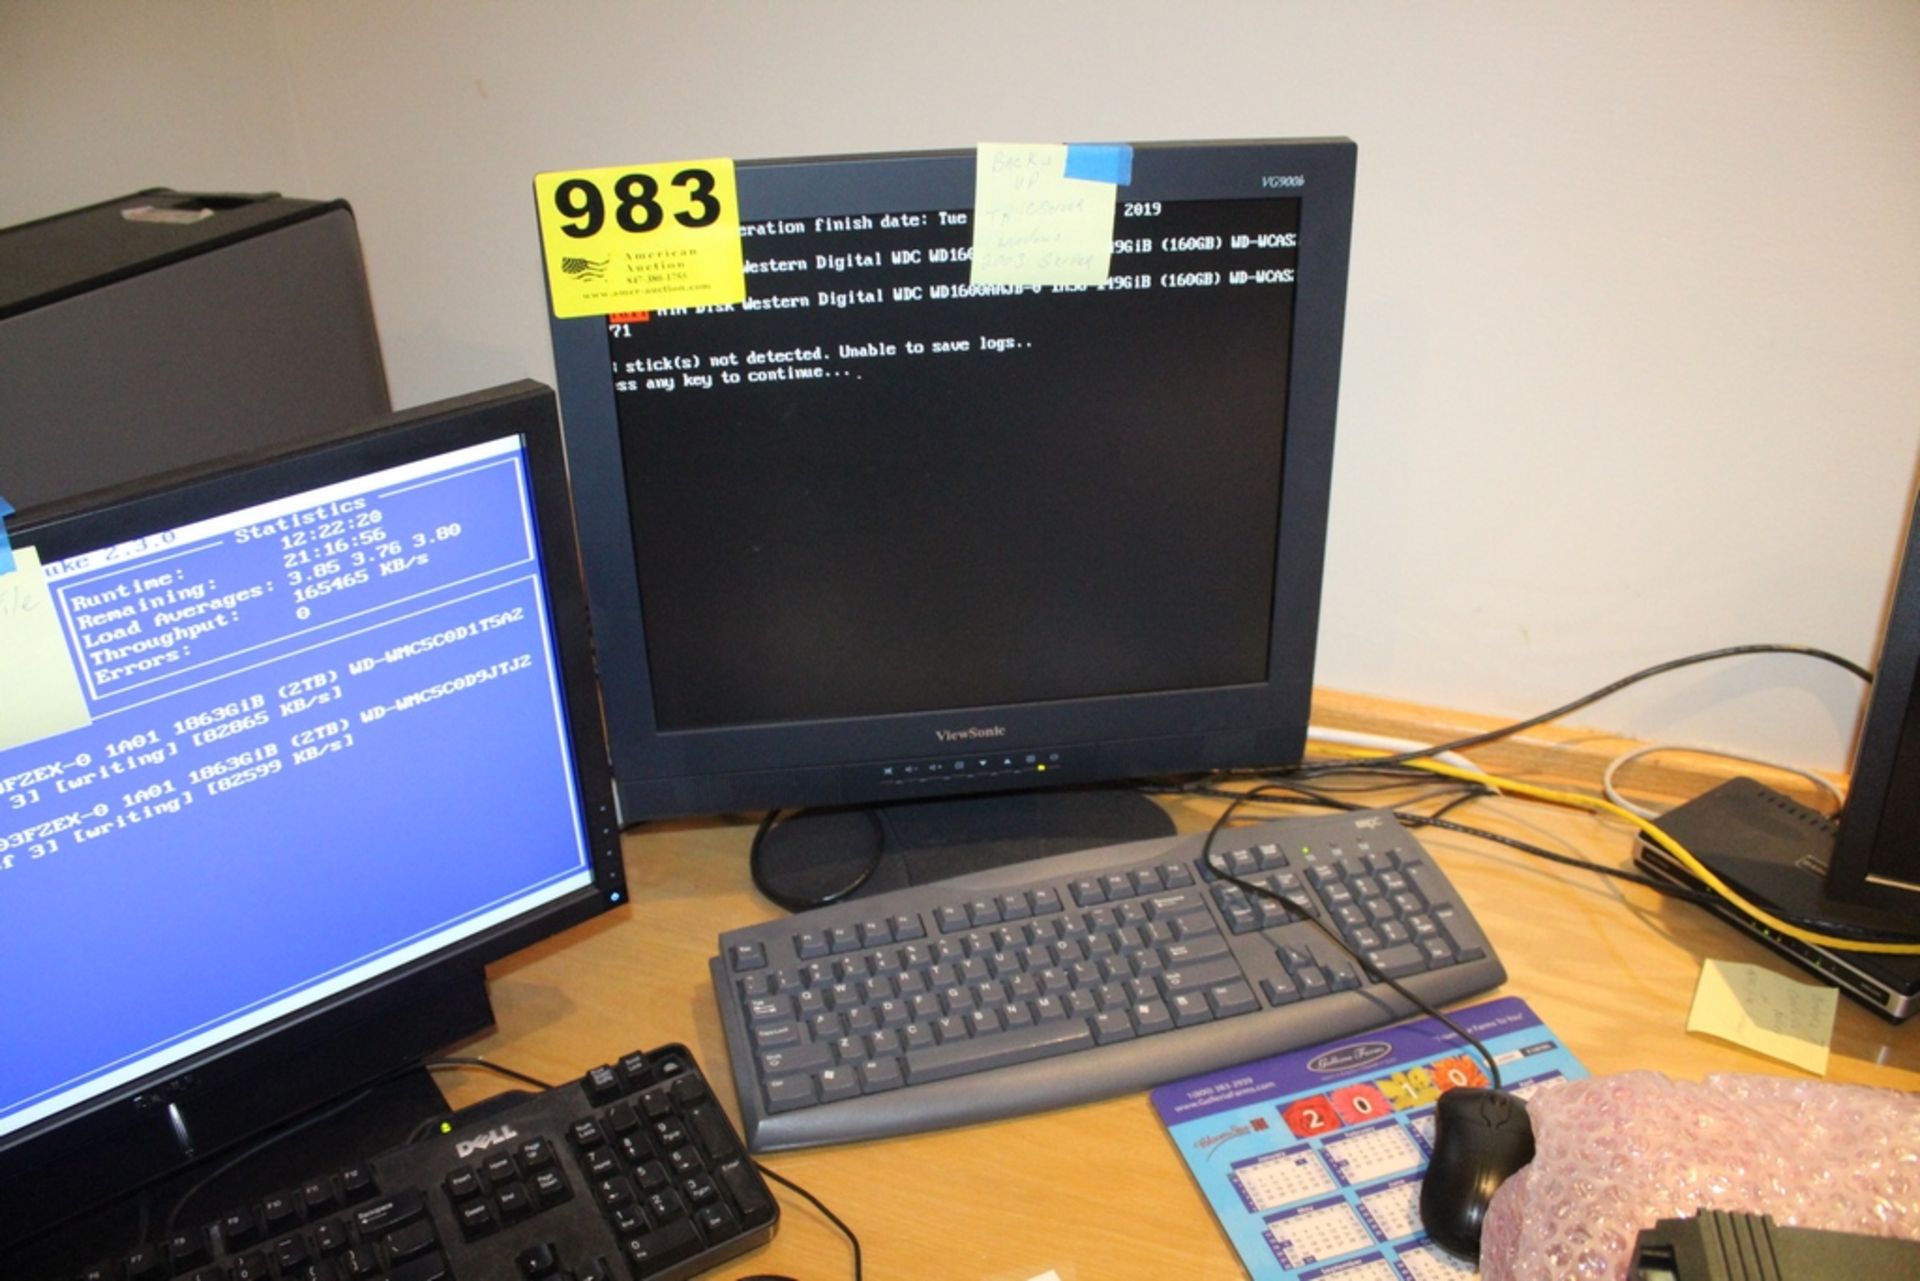 DELL OPTIPLEX GX260 DESKTOP COMPUTER WITH VIEWSONIC 18" FLATSCREEN MONITOR, KEYBOARD AND MOUSE